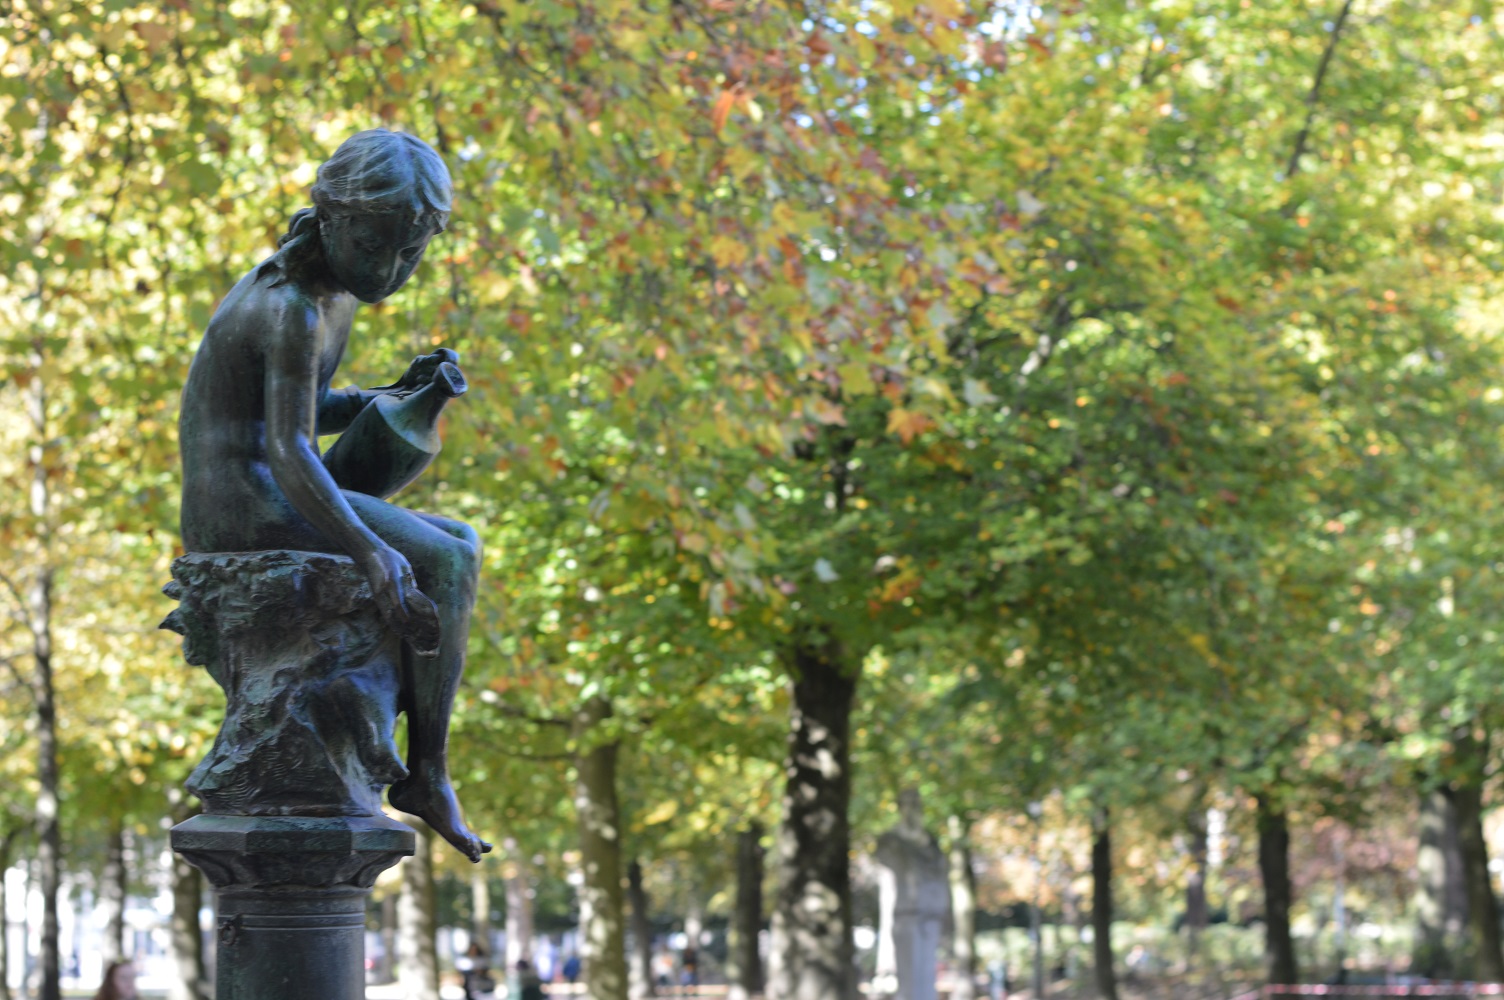 Sculpture in the Parc de Bruxelles in Brussels, Belgium